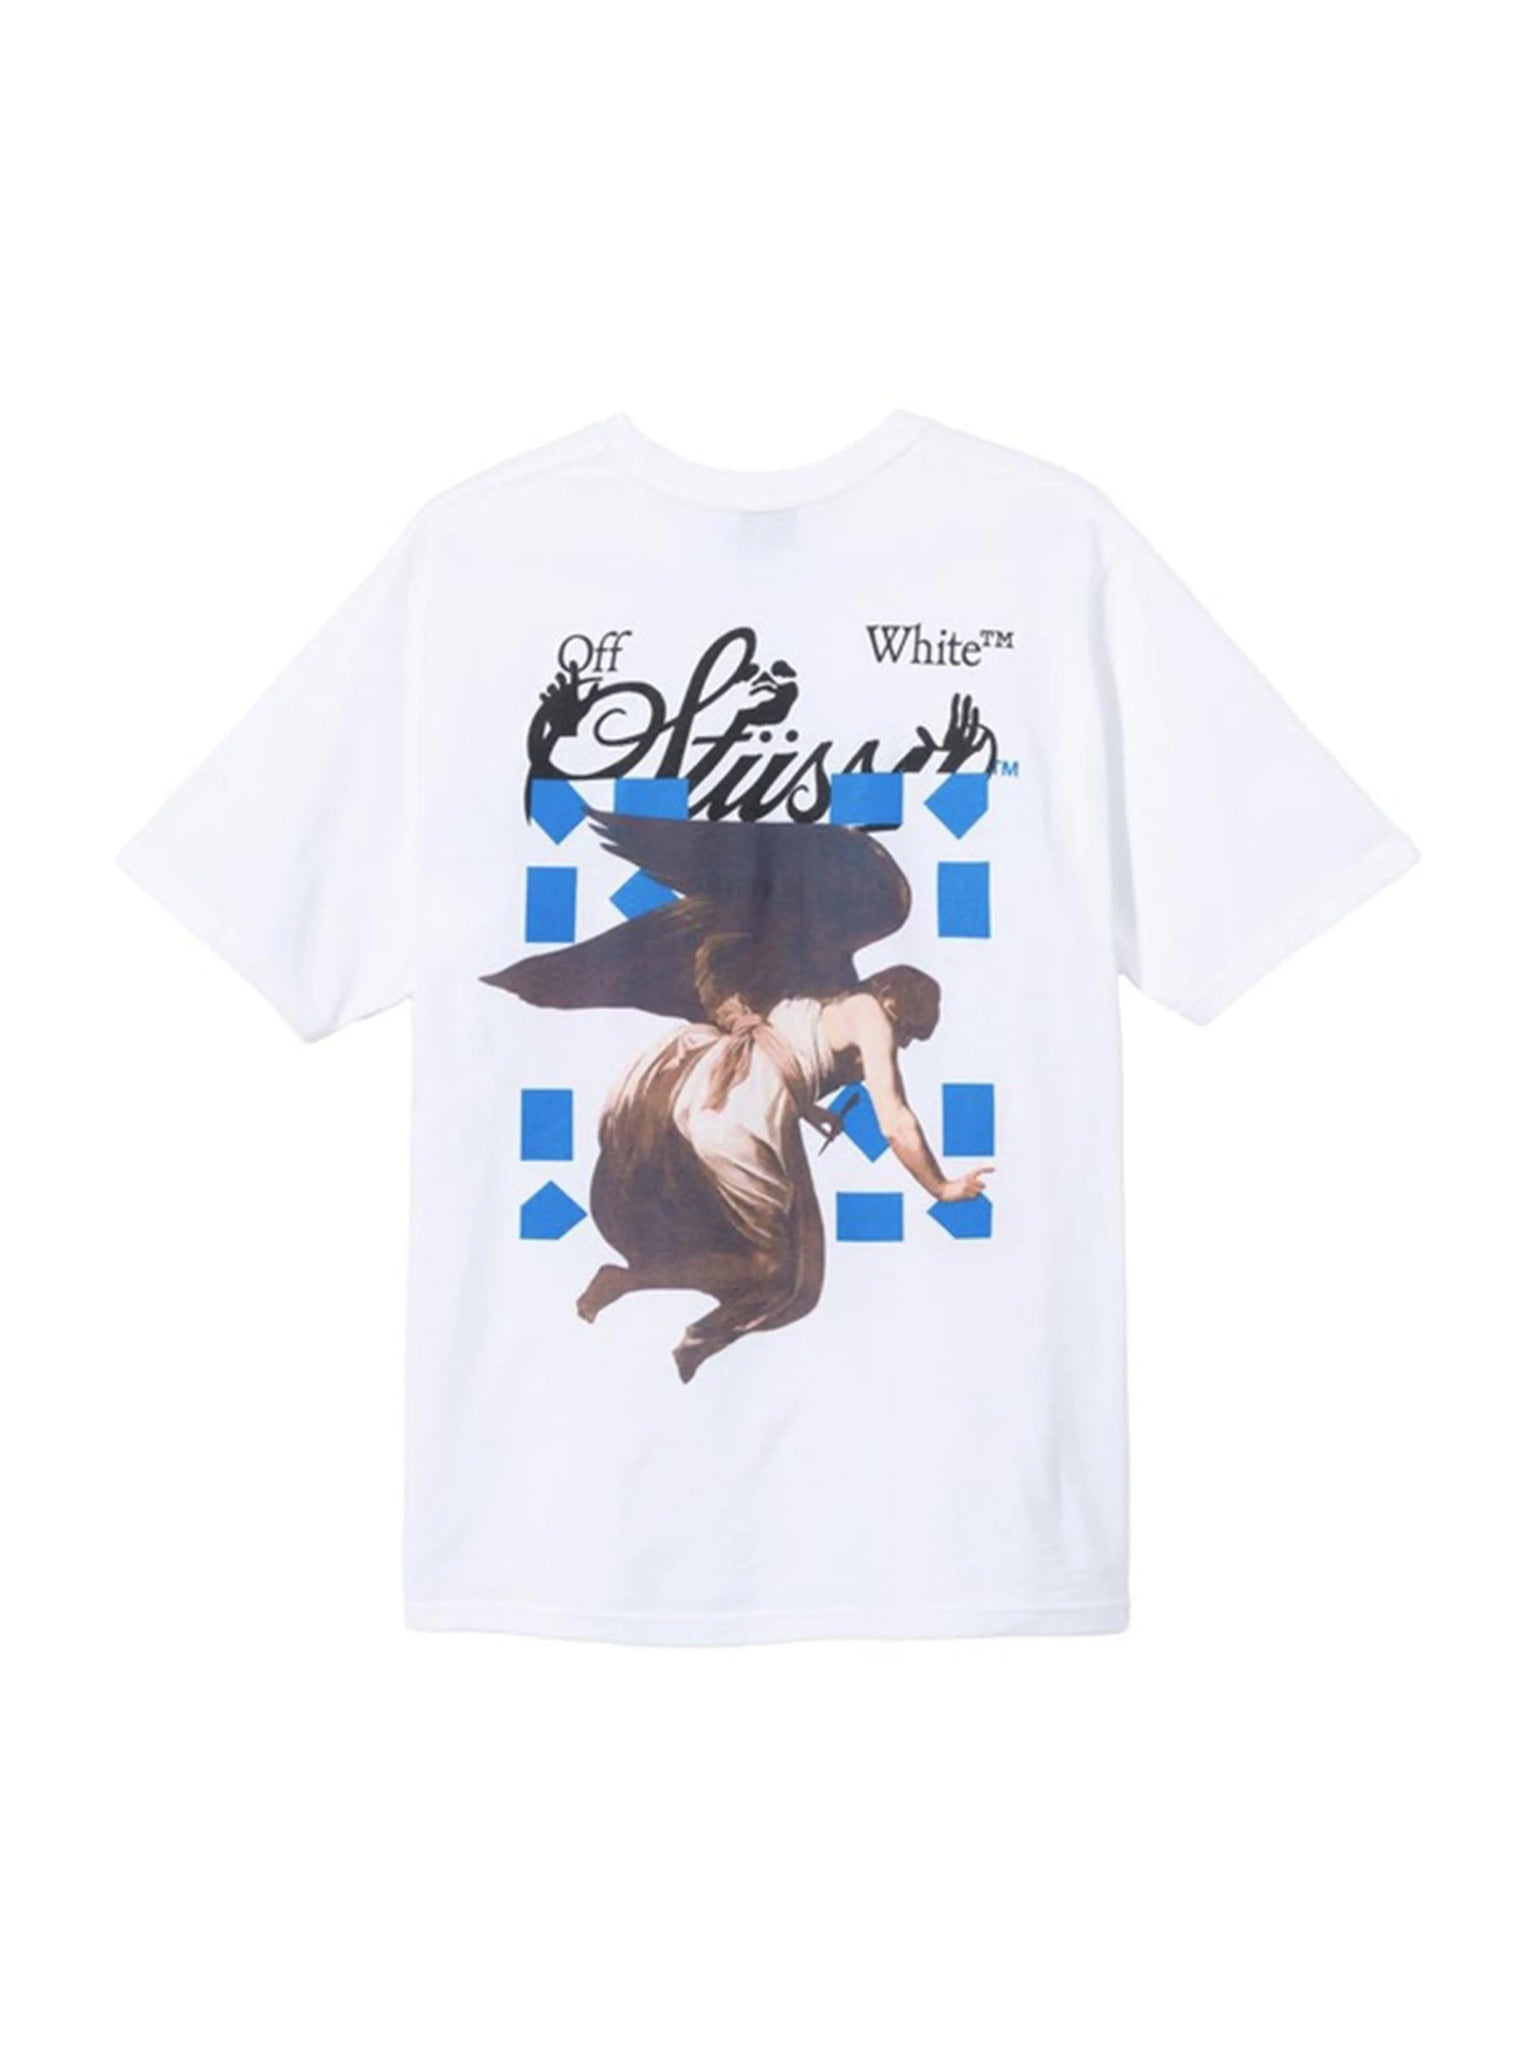 Stussy x Virgil Abloh World Tour Collection T-Shirt White Off-White